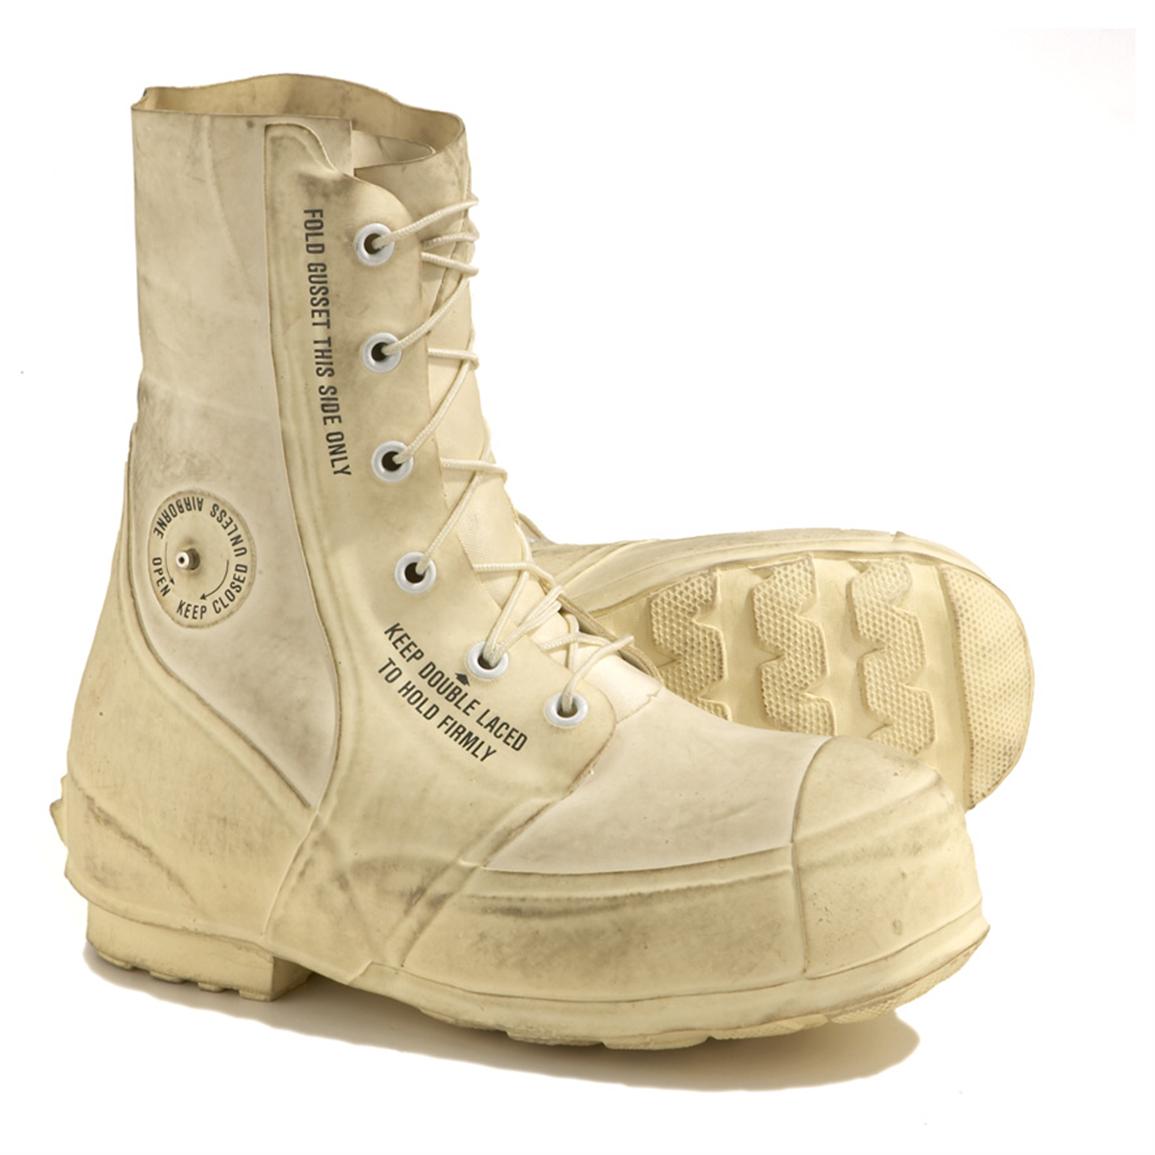 U.S. Military Mickey Boots